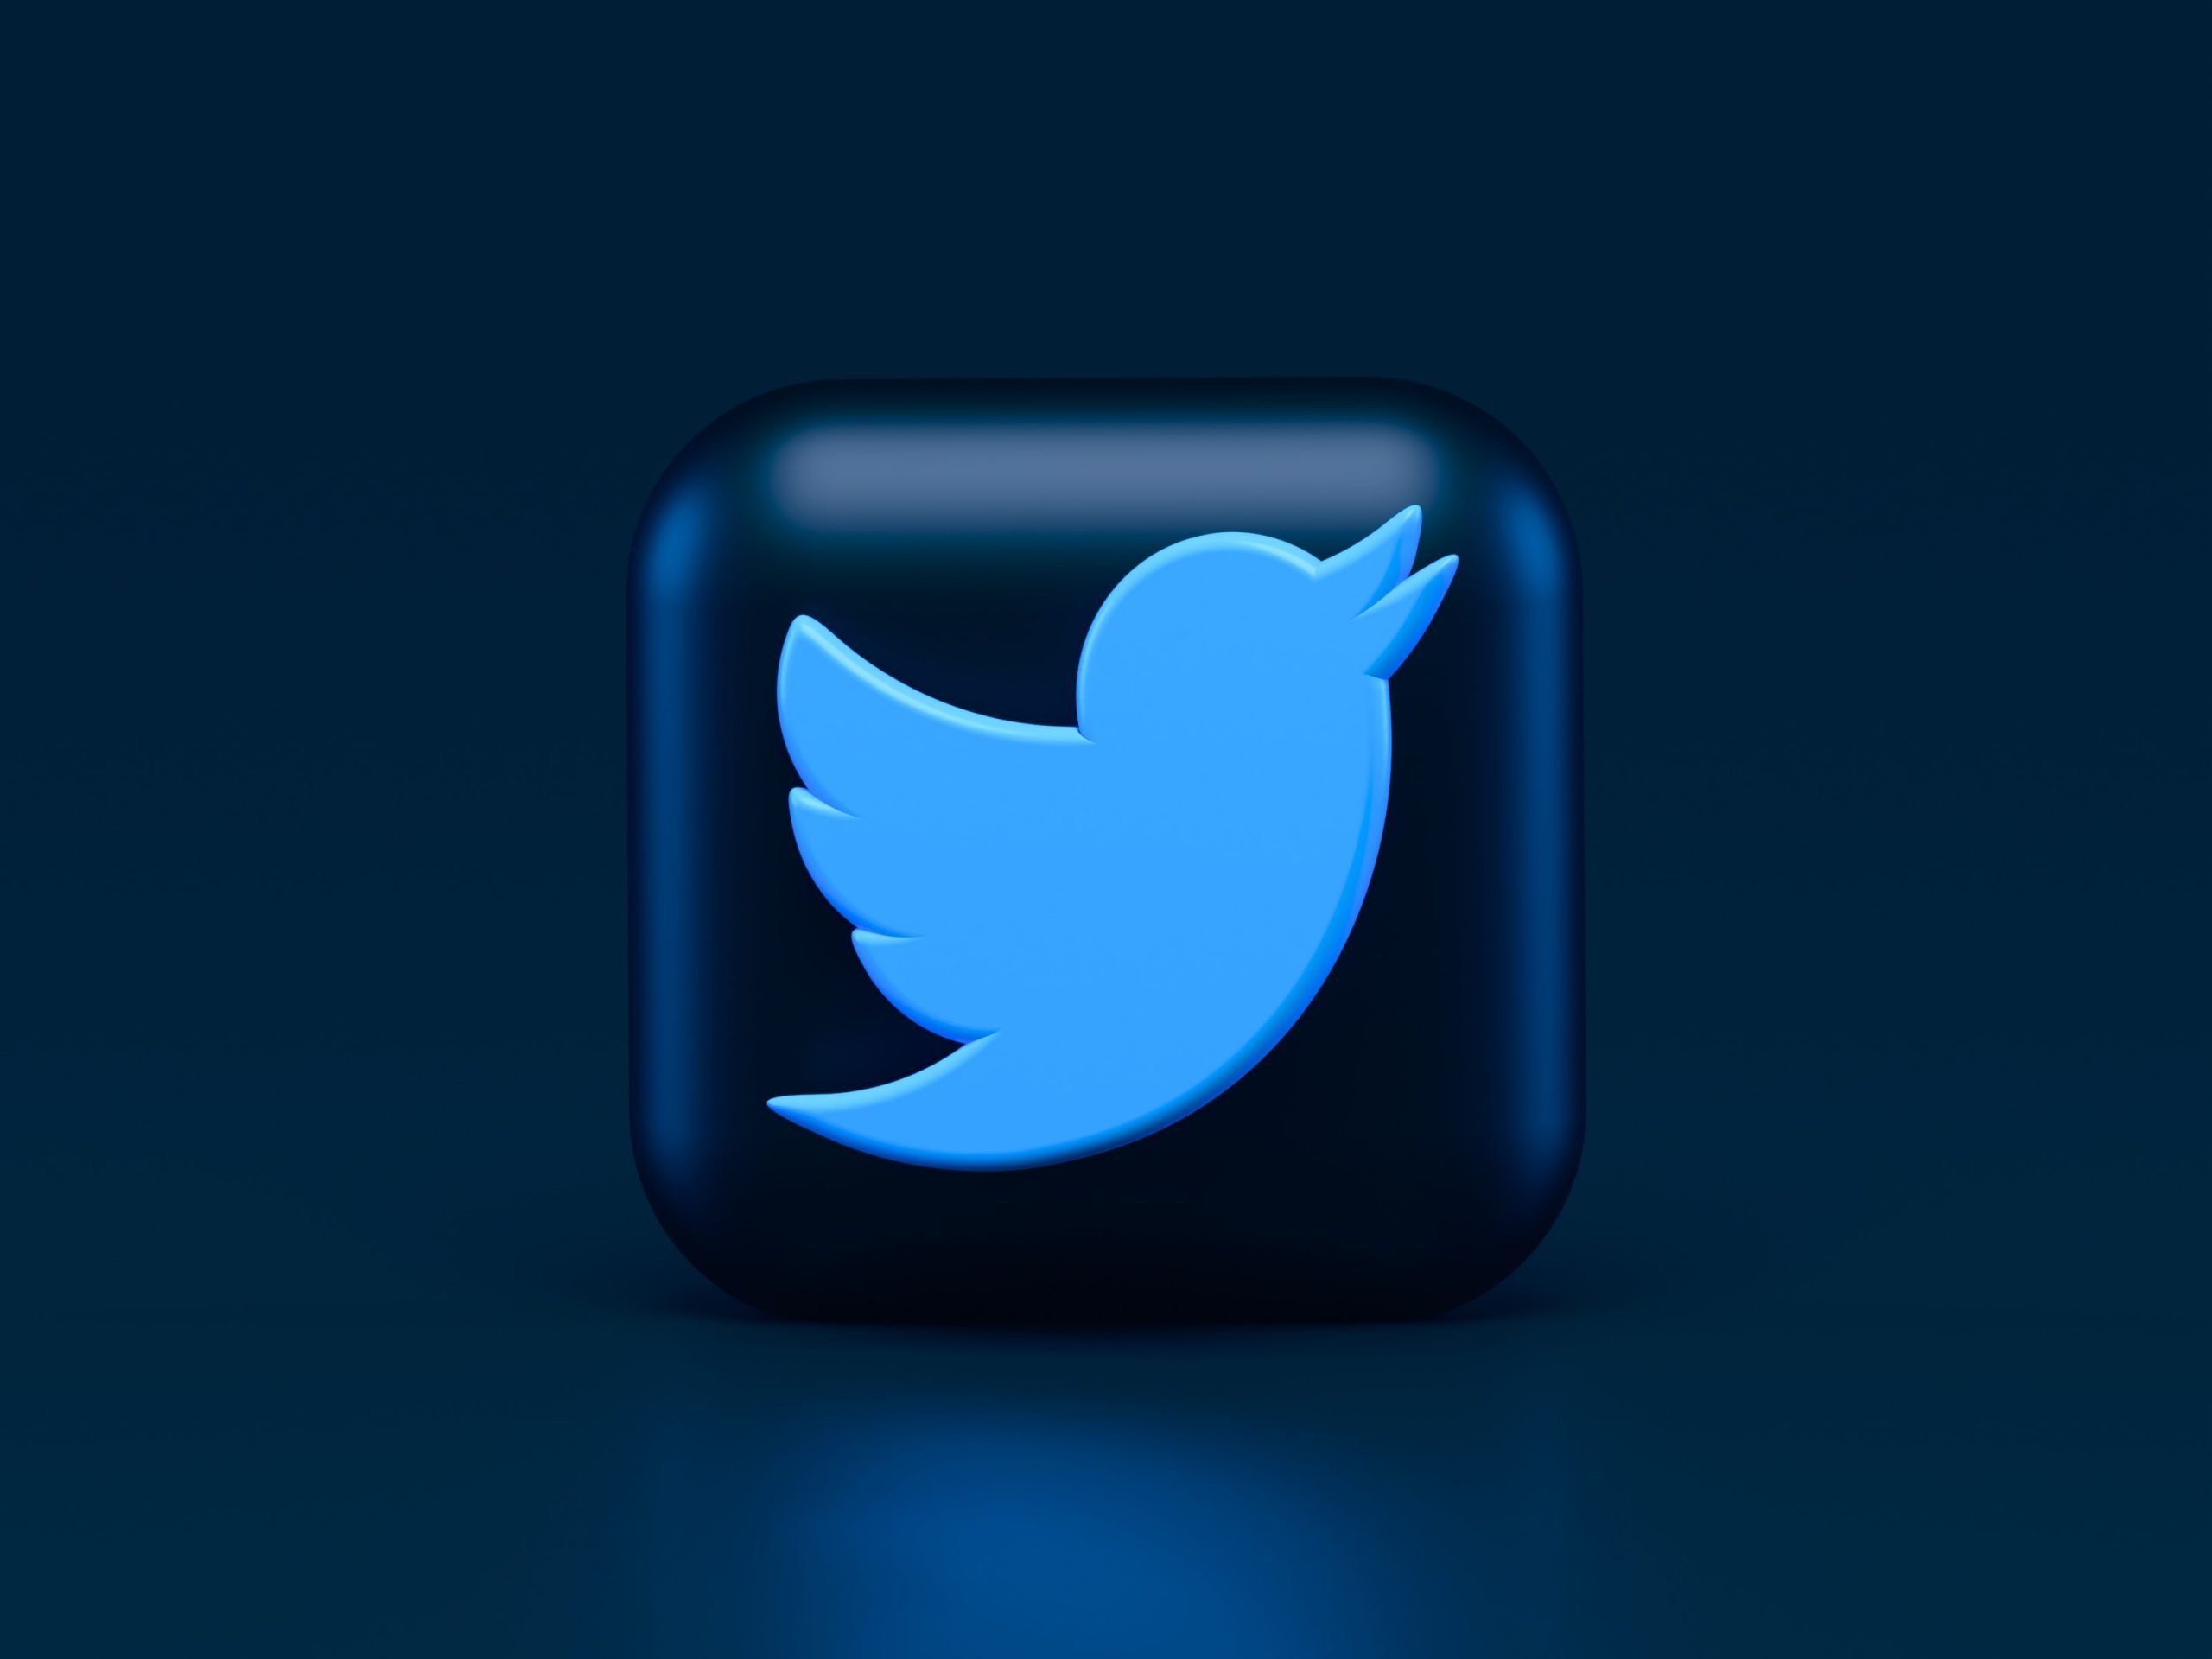 The recognizable blue Twitter bird